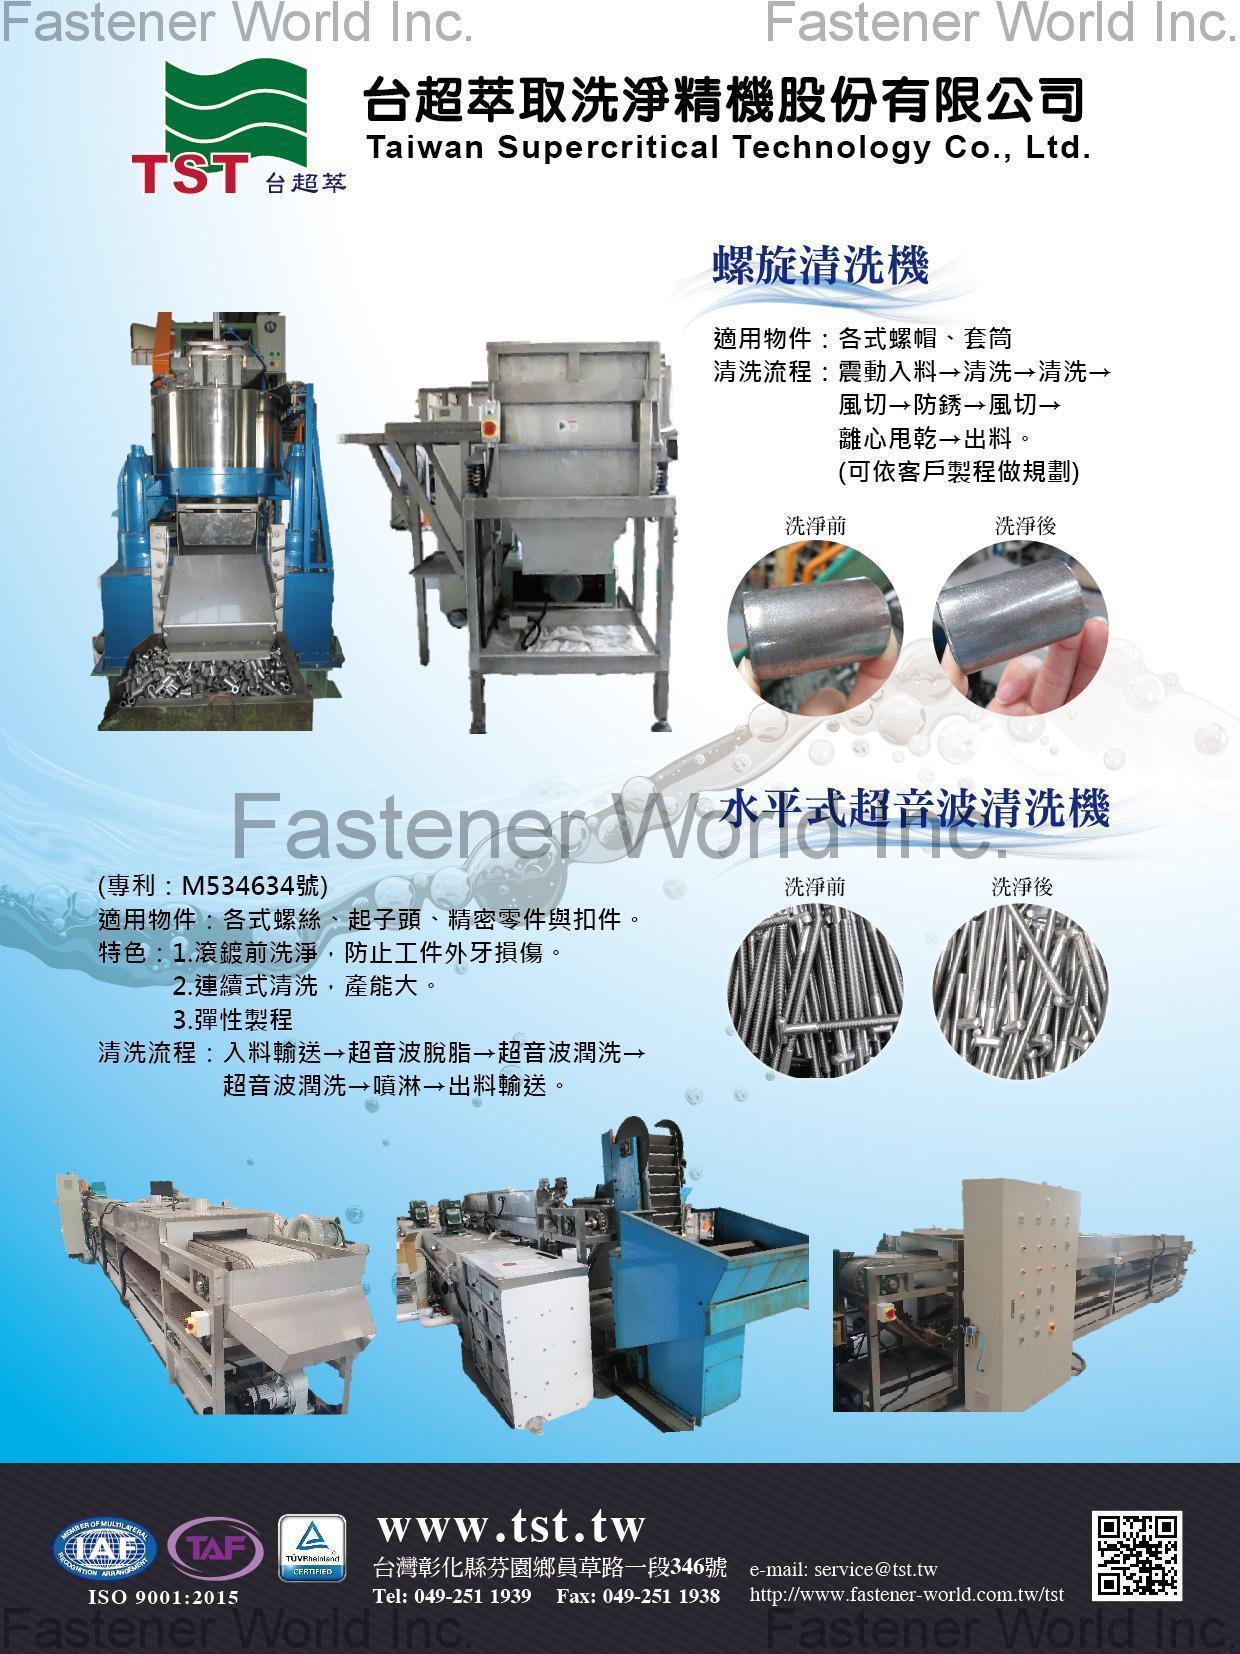 TAIWAN SUPERCRITICAL TECHNOLOGY CO., LTD. , 螺旋清洗機&平流式超音波清洗機 , Surface Treatment And Related Equipment